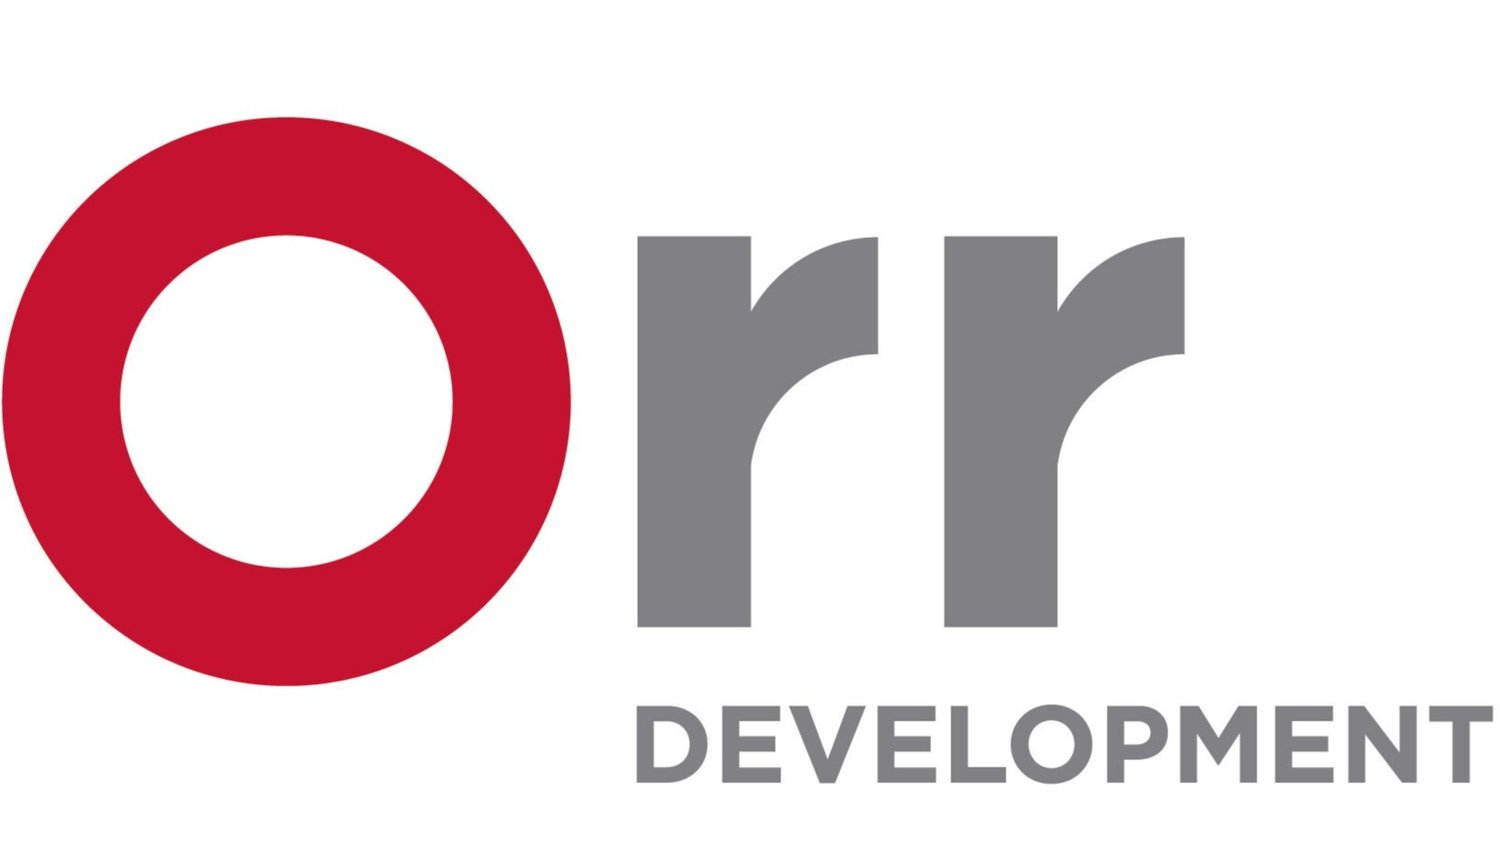 Orr Development